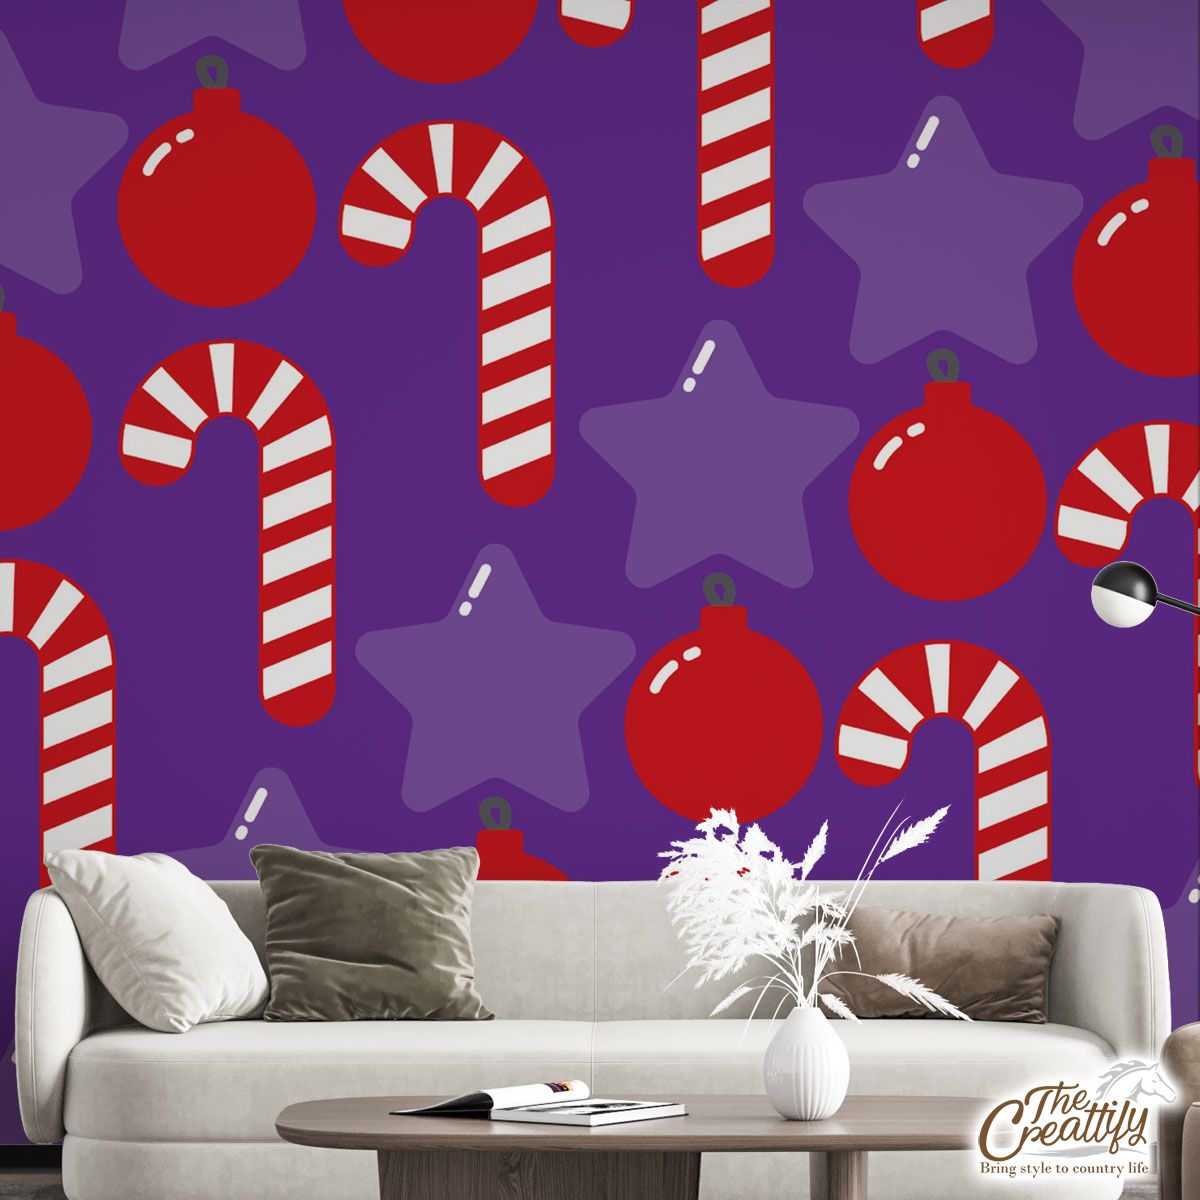 Candy Canes, Christmas Star, Christmas Balls Wall Mural